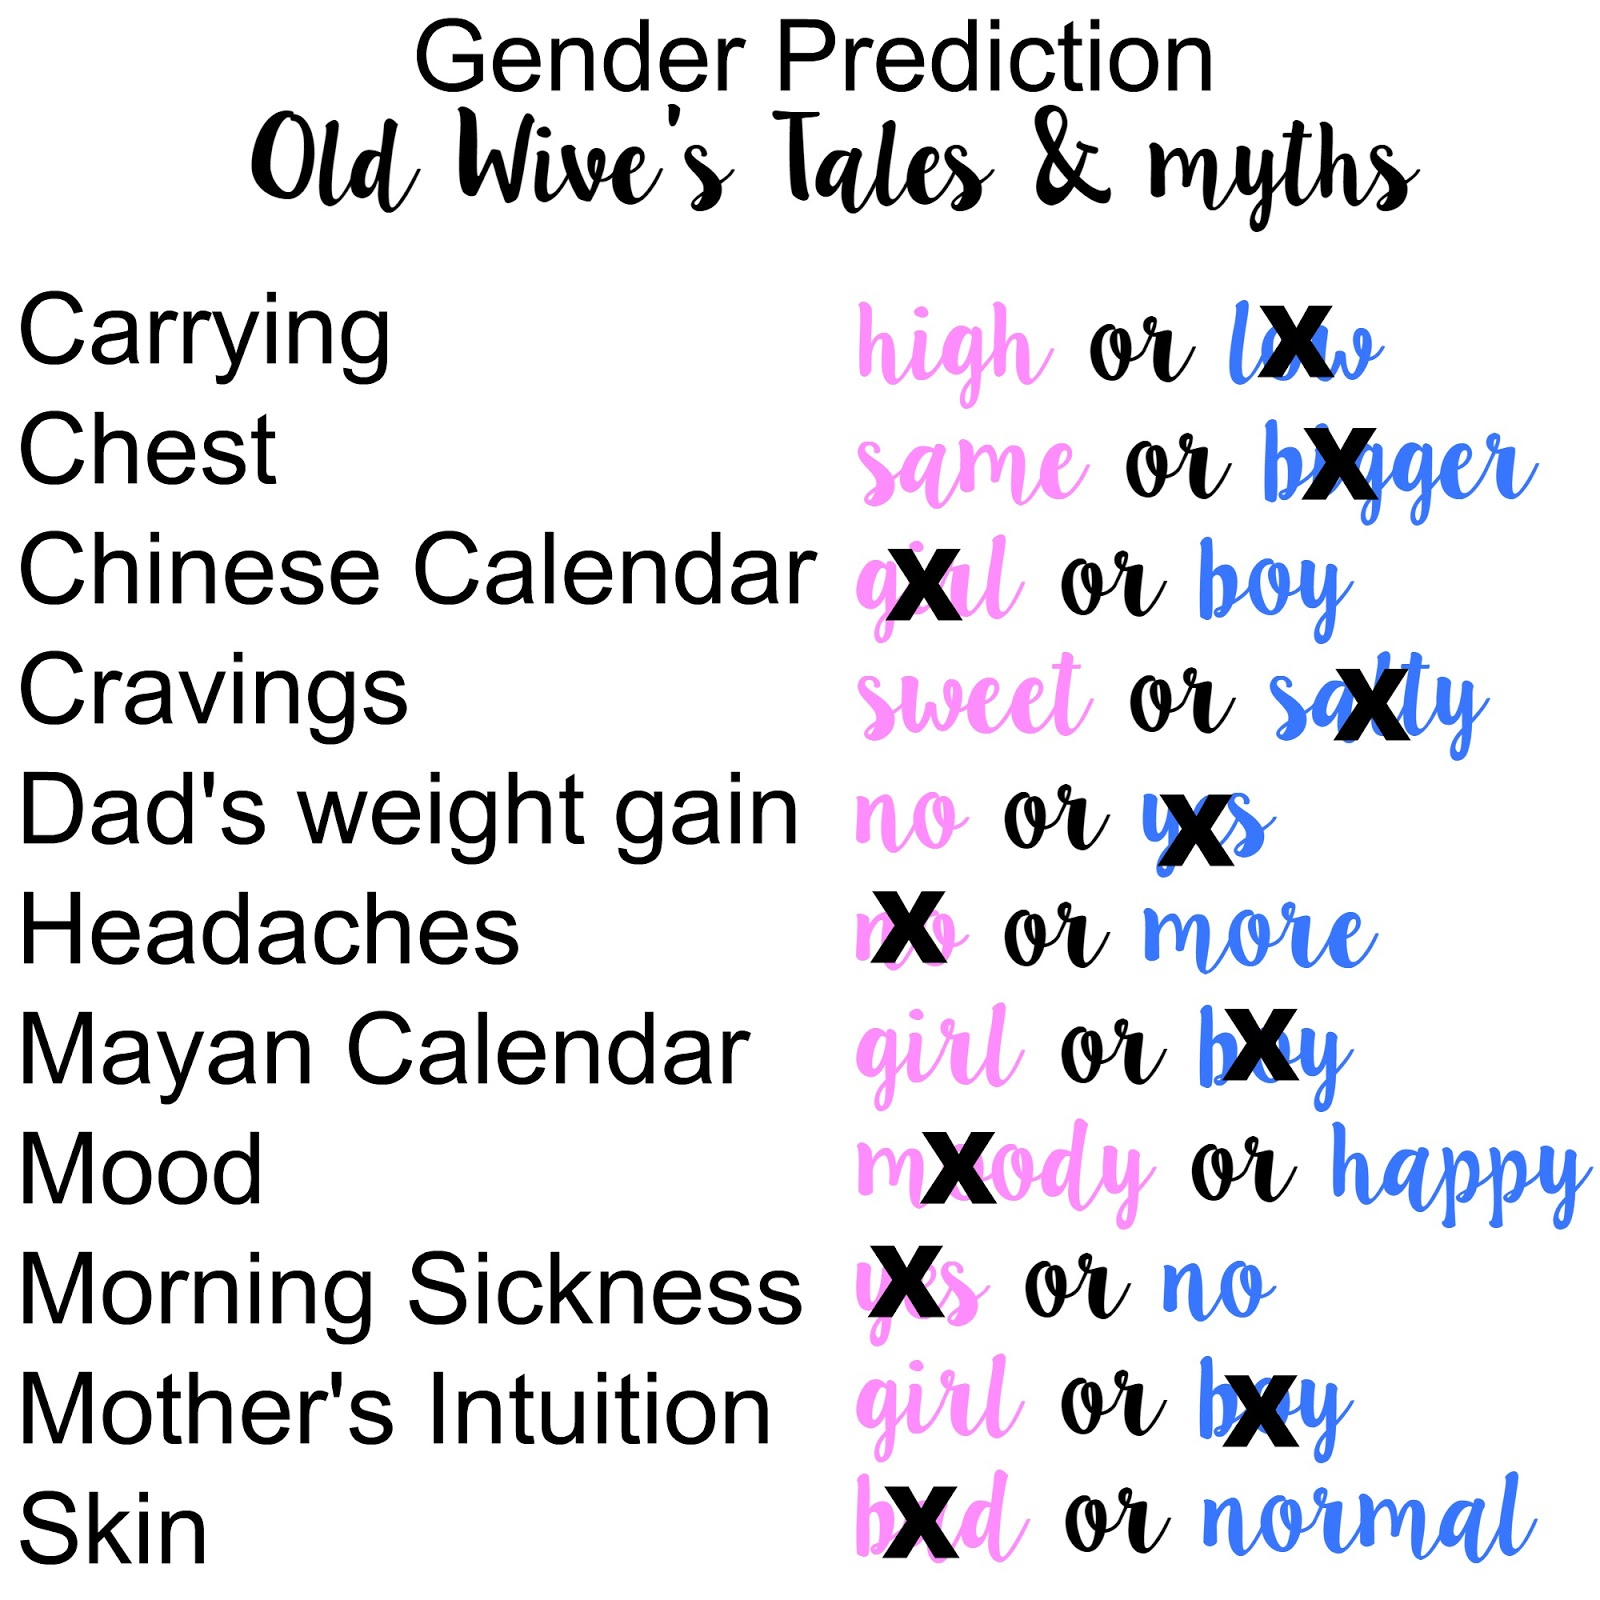 mayan calendar gender.